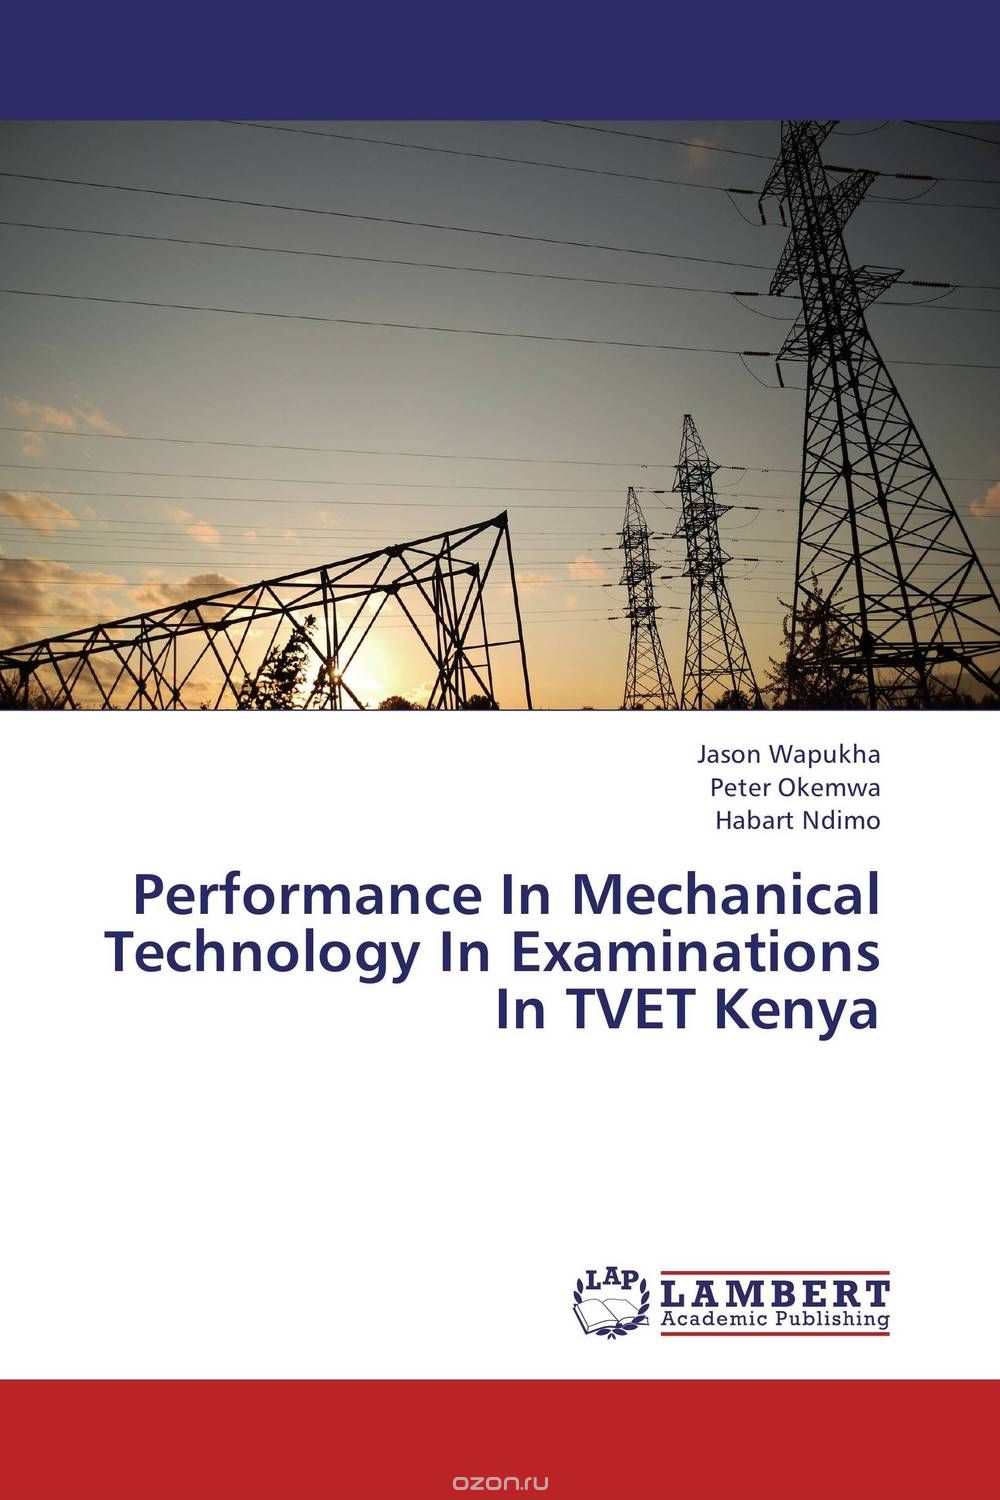 Скачать книгу "Performance In Mechanical Technology In Examinations In TVET Kenya"